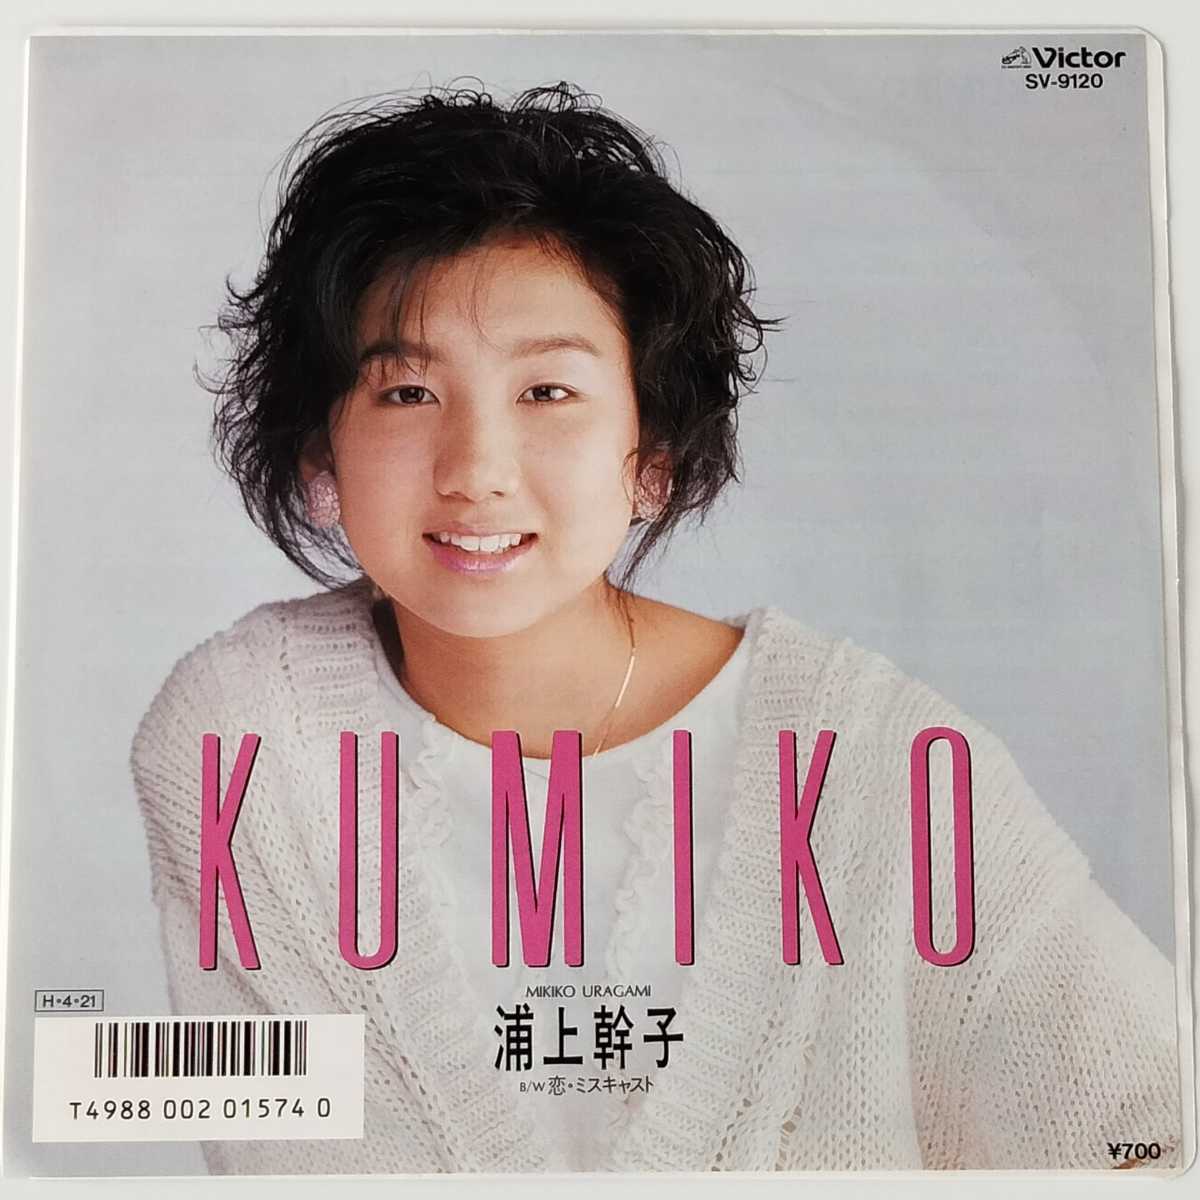 【7inch】浦上幹子 / KUMIKO / 恋・ミスキャスト (SV-9120) MIKIKO URAGAMI EP レコード_画像1